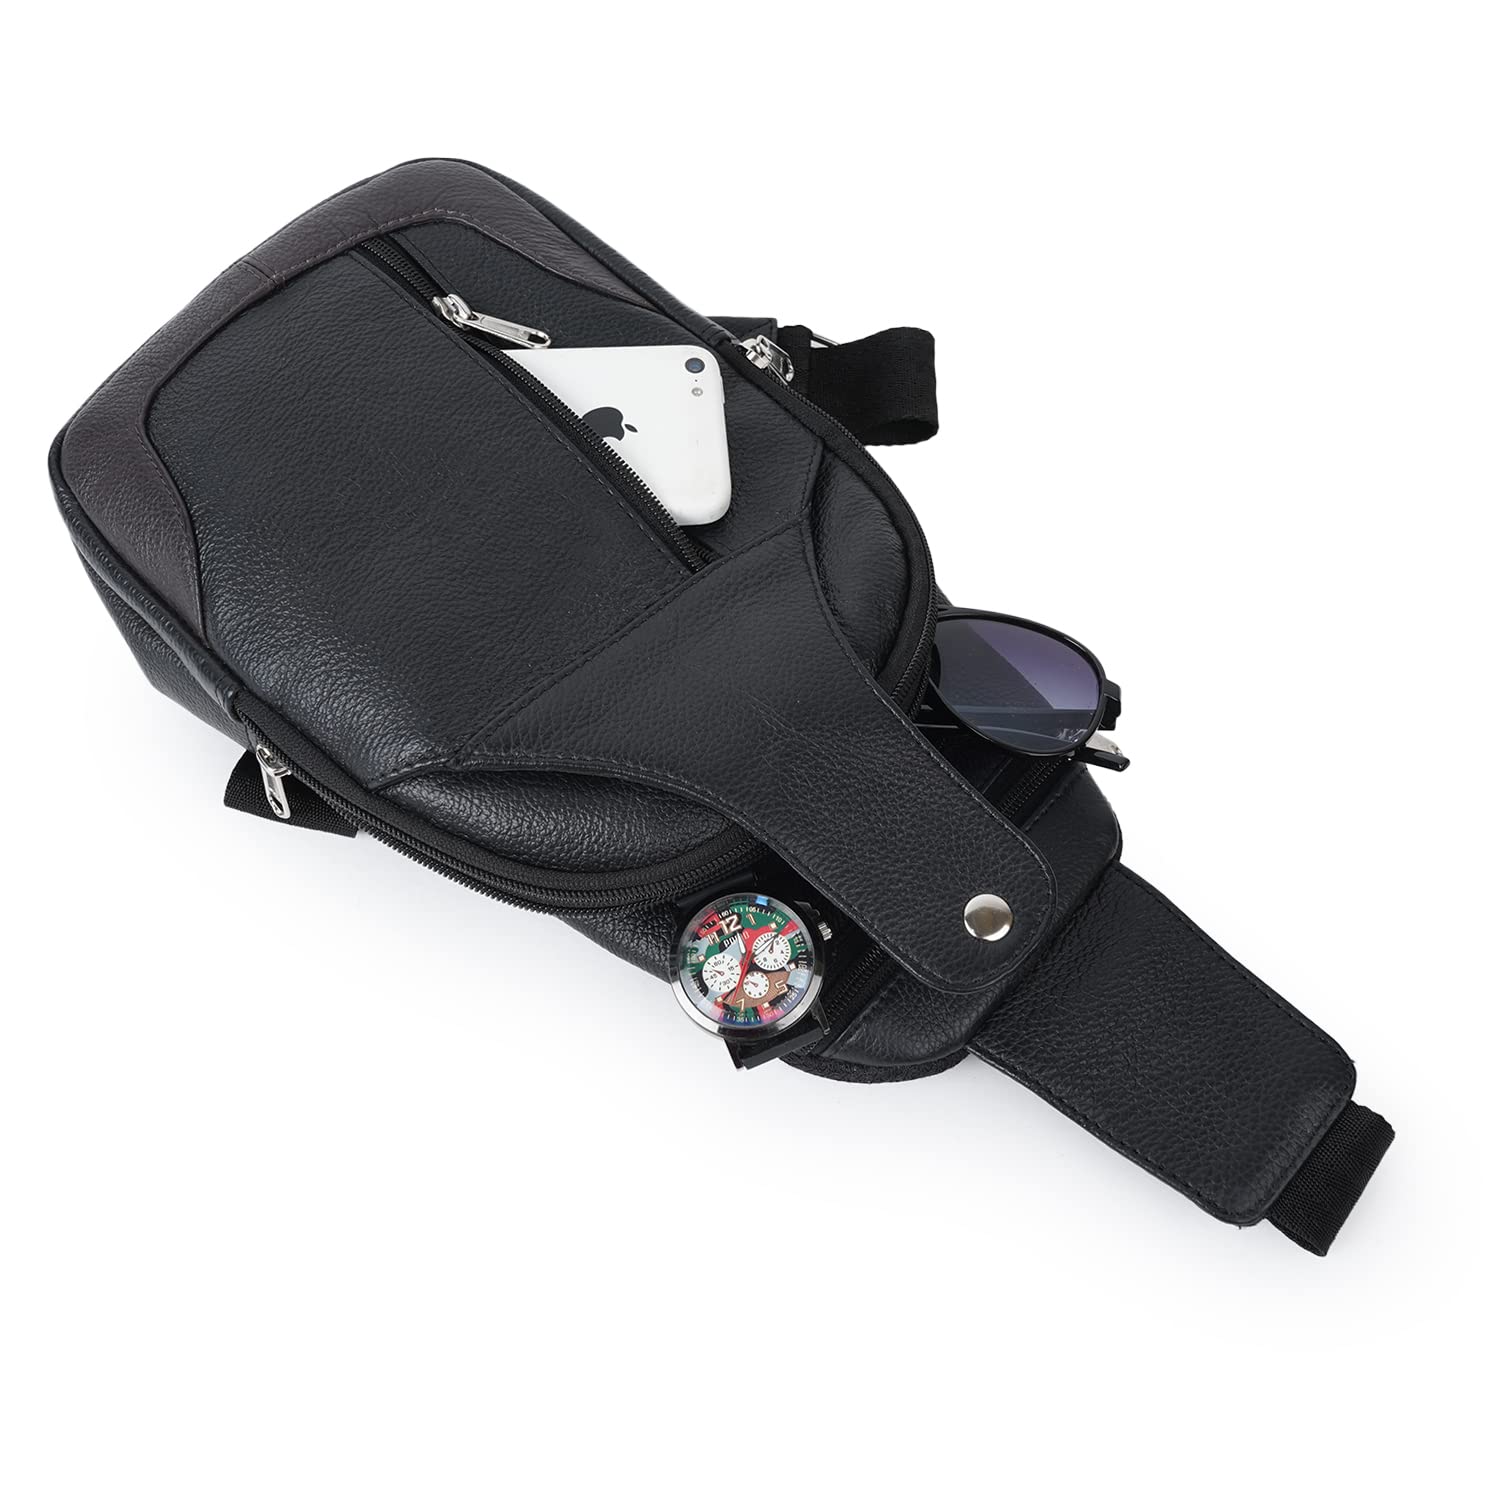 CIMONI® Premium Genuine Leather Sling Bag Classy Trendy Crossbody Bag Shoulder Daytrip Travel Stylish Purse